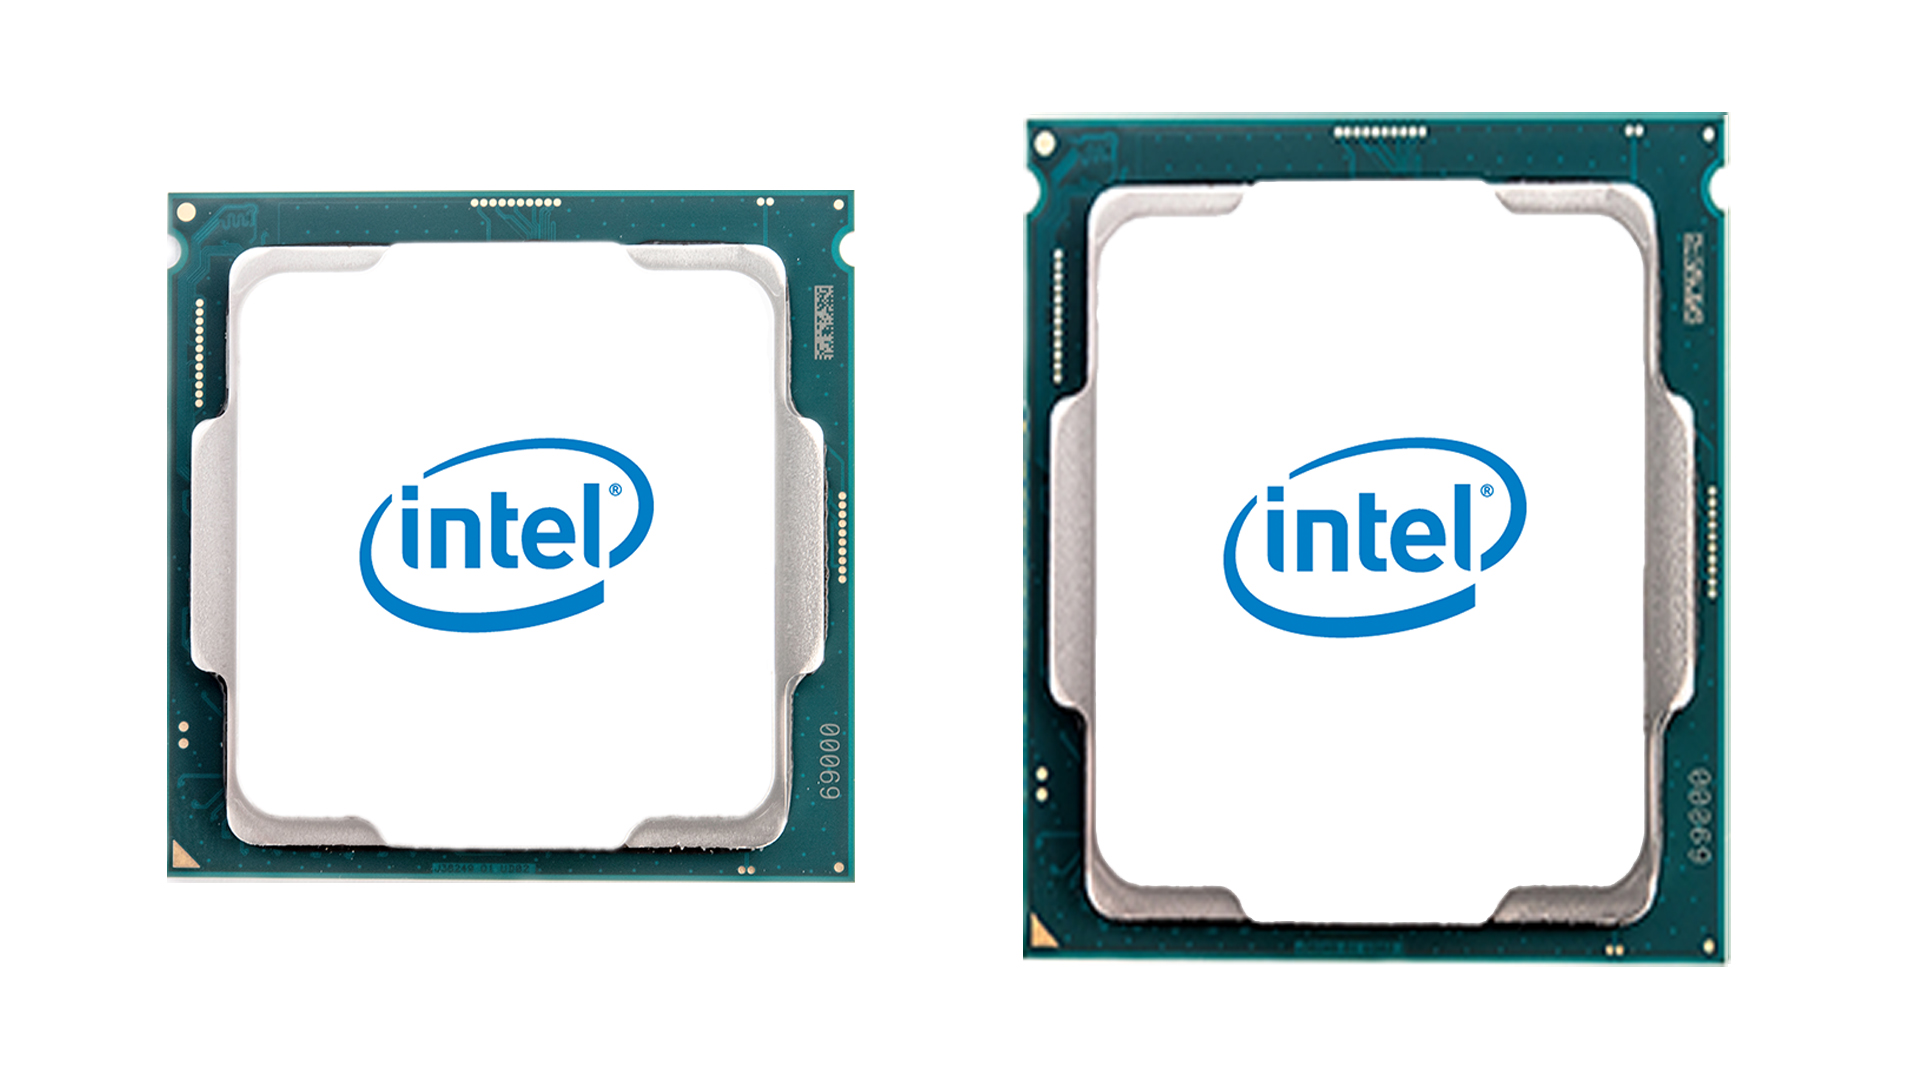 Intel’s Alder Lake flagship i9 12900K could beat the AMD Ryzen 9 5950X